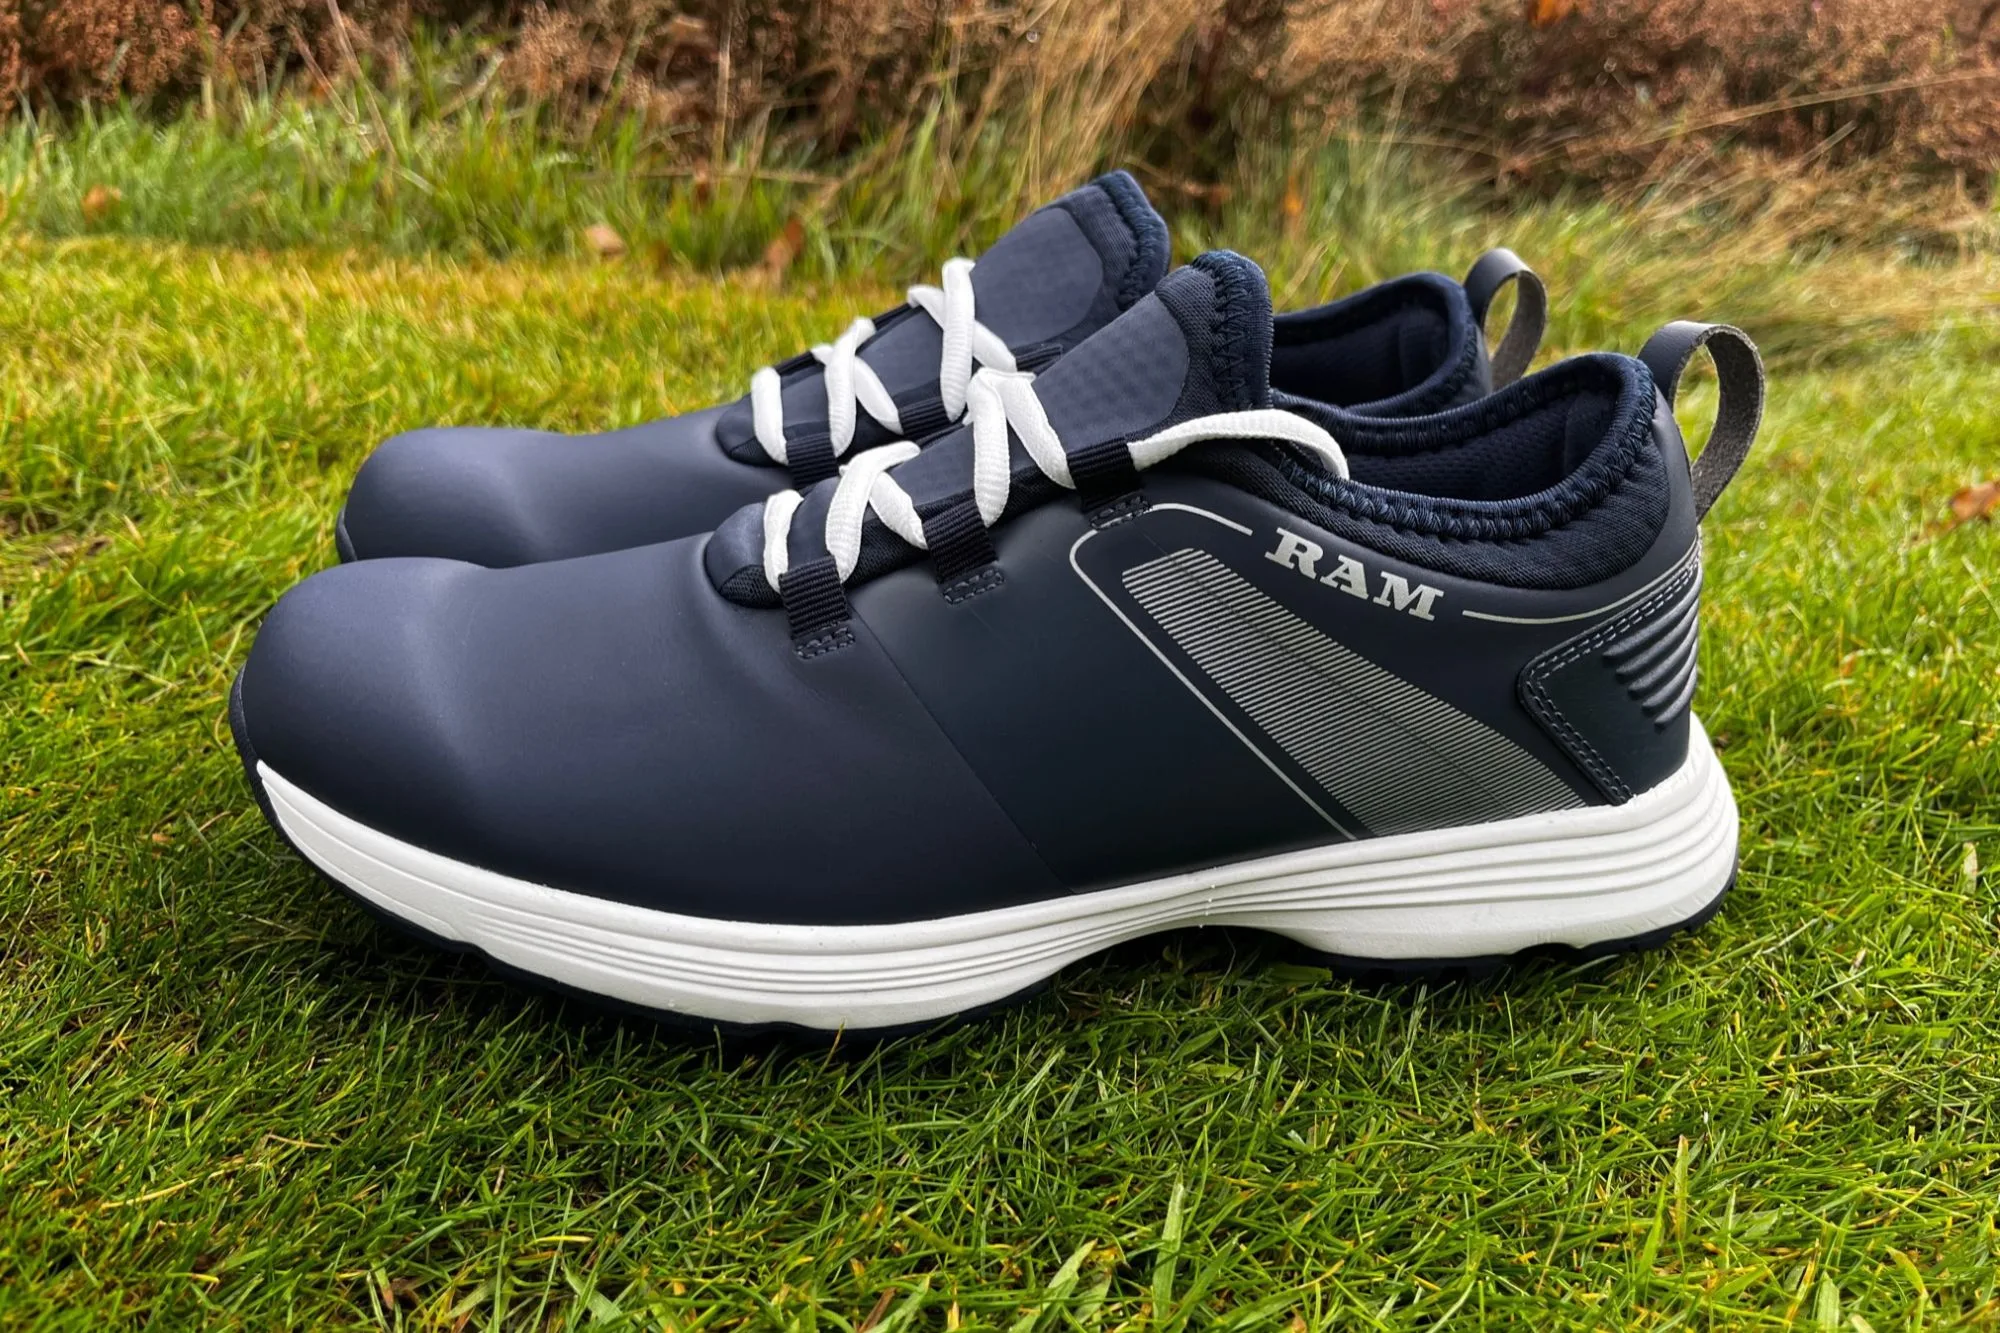 Ram XT1 golf shoes review